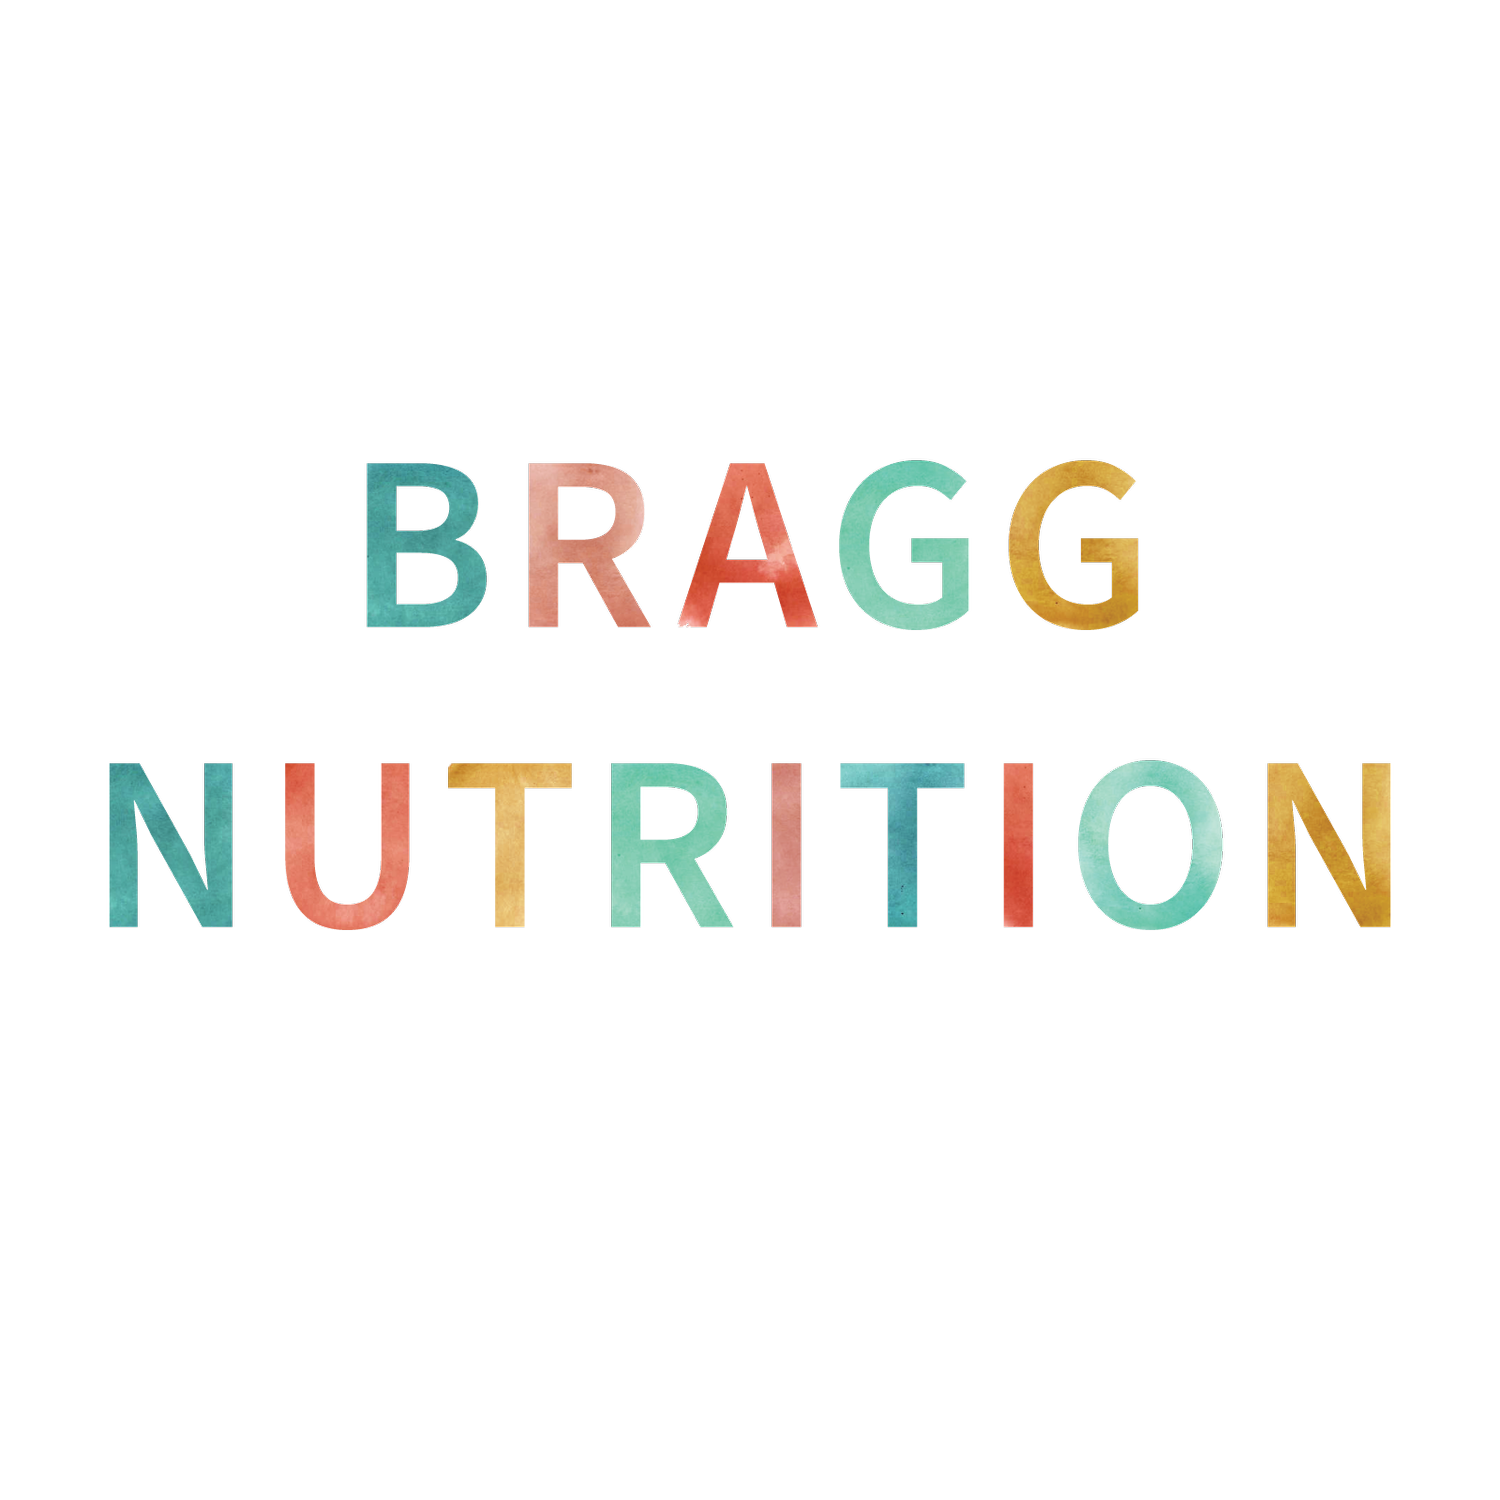 BRAGG NUTRITION